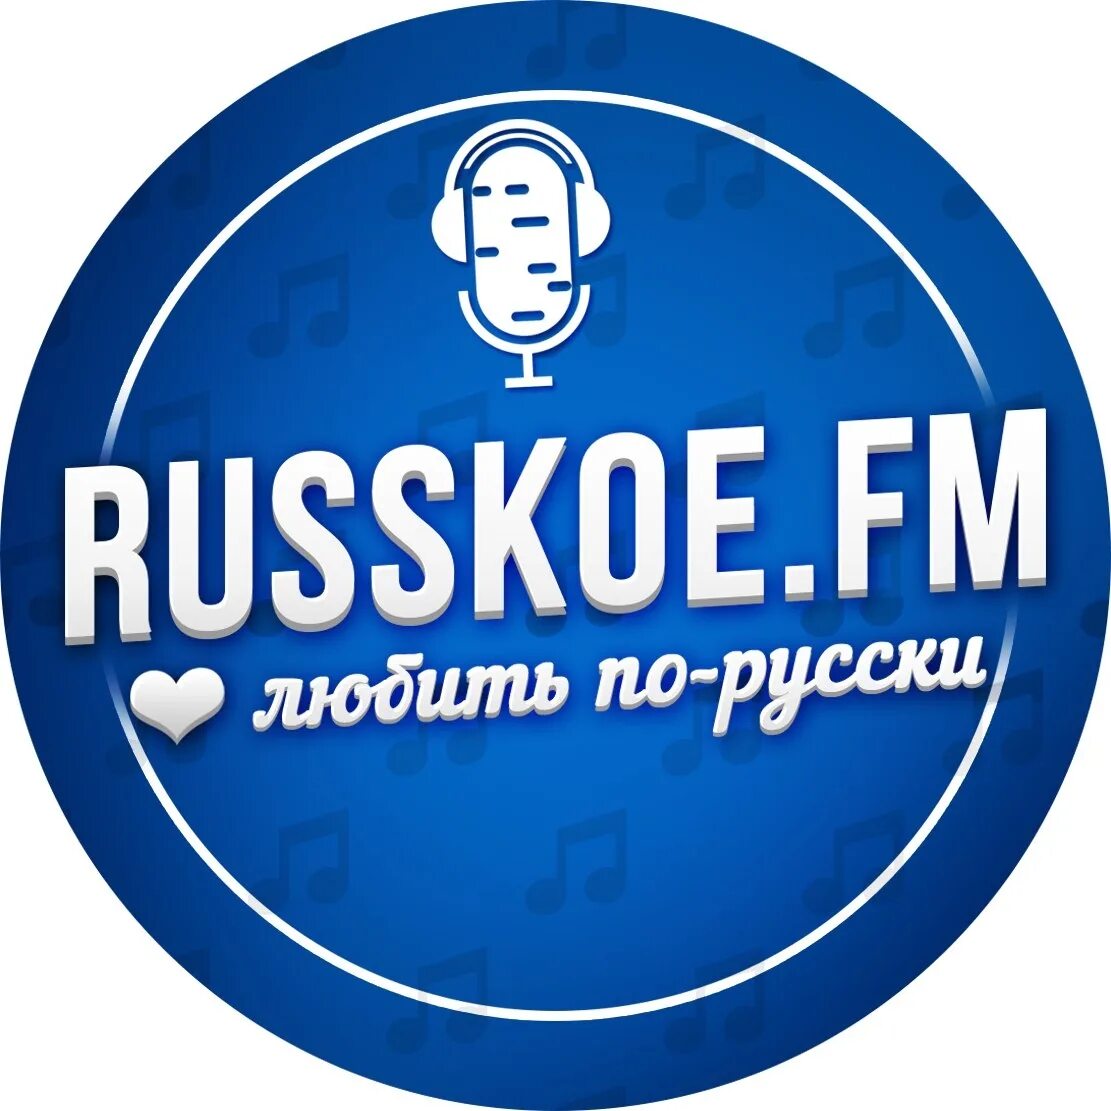 Русское радио москва фм. Русское fm. Русское радио fm. ФМ. Лого русское радио ФМ.